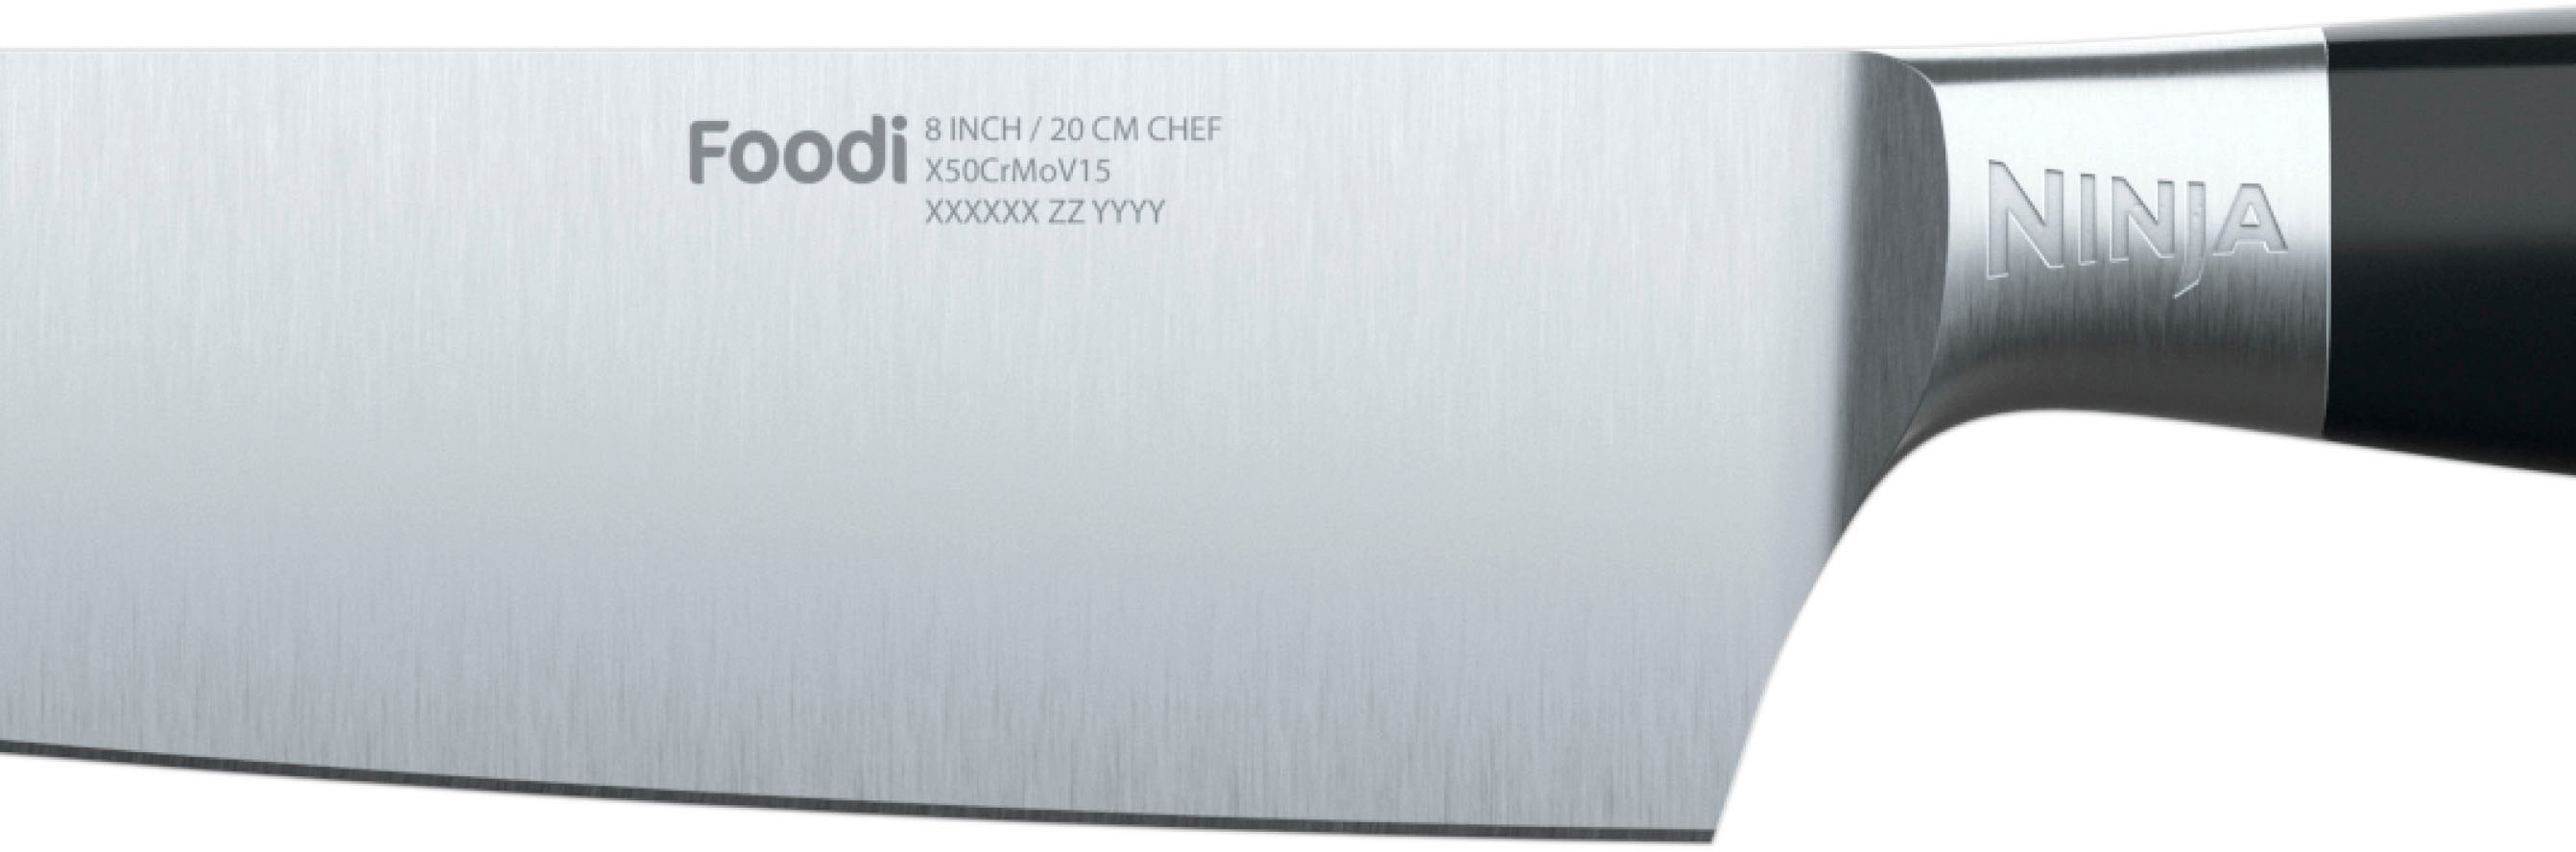 Ninja™ Foodi™ NeverDull™ System Essential 8” Chef Knife, K10020